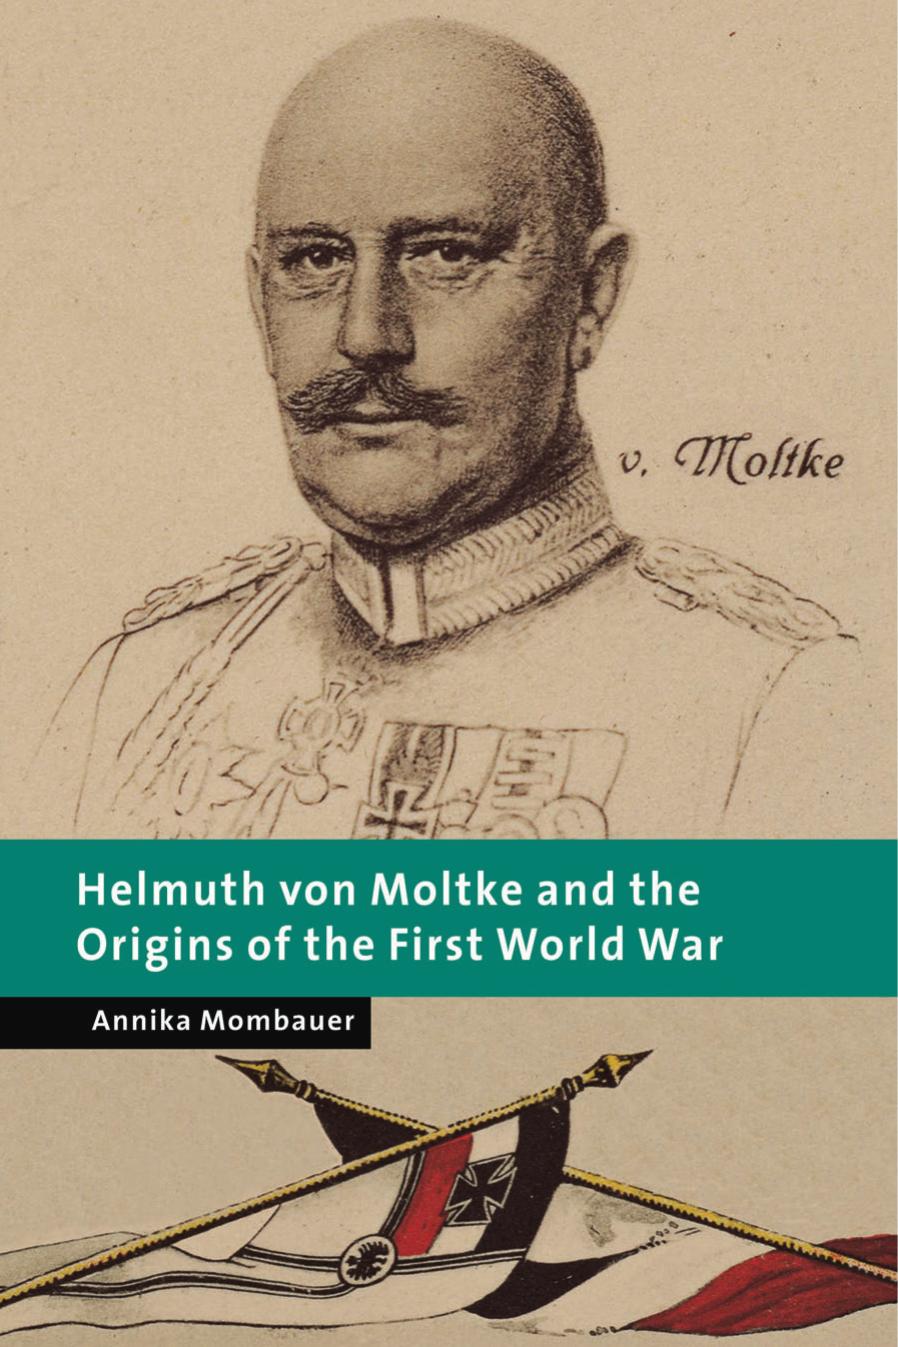 HELMUTH VON MOLTKE AND THE ORIGINS OF THE FIRST WORLD WAR by ANNIKA MOMBAUER